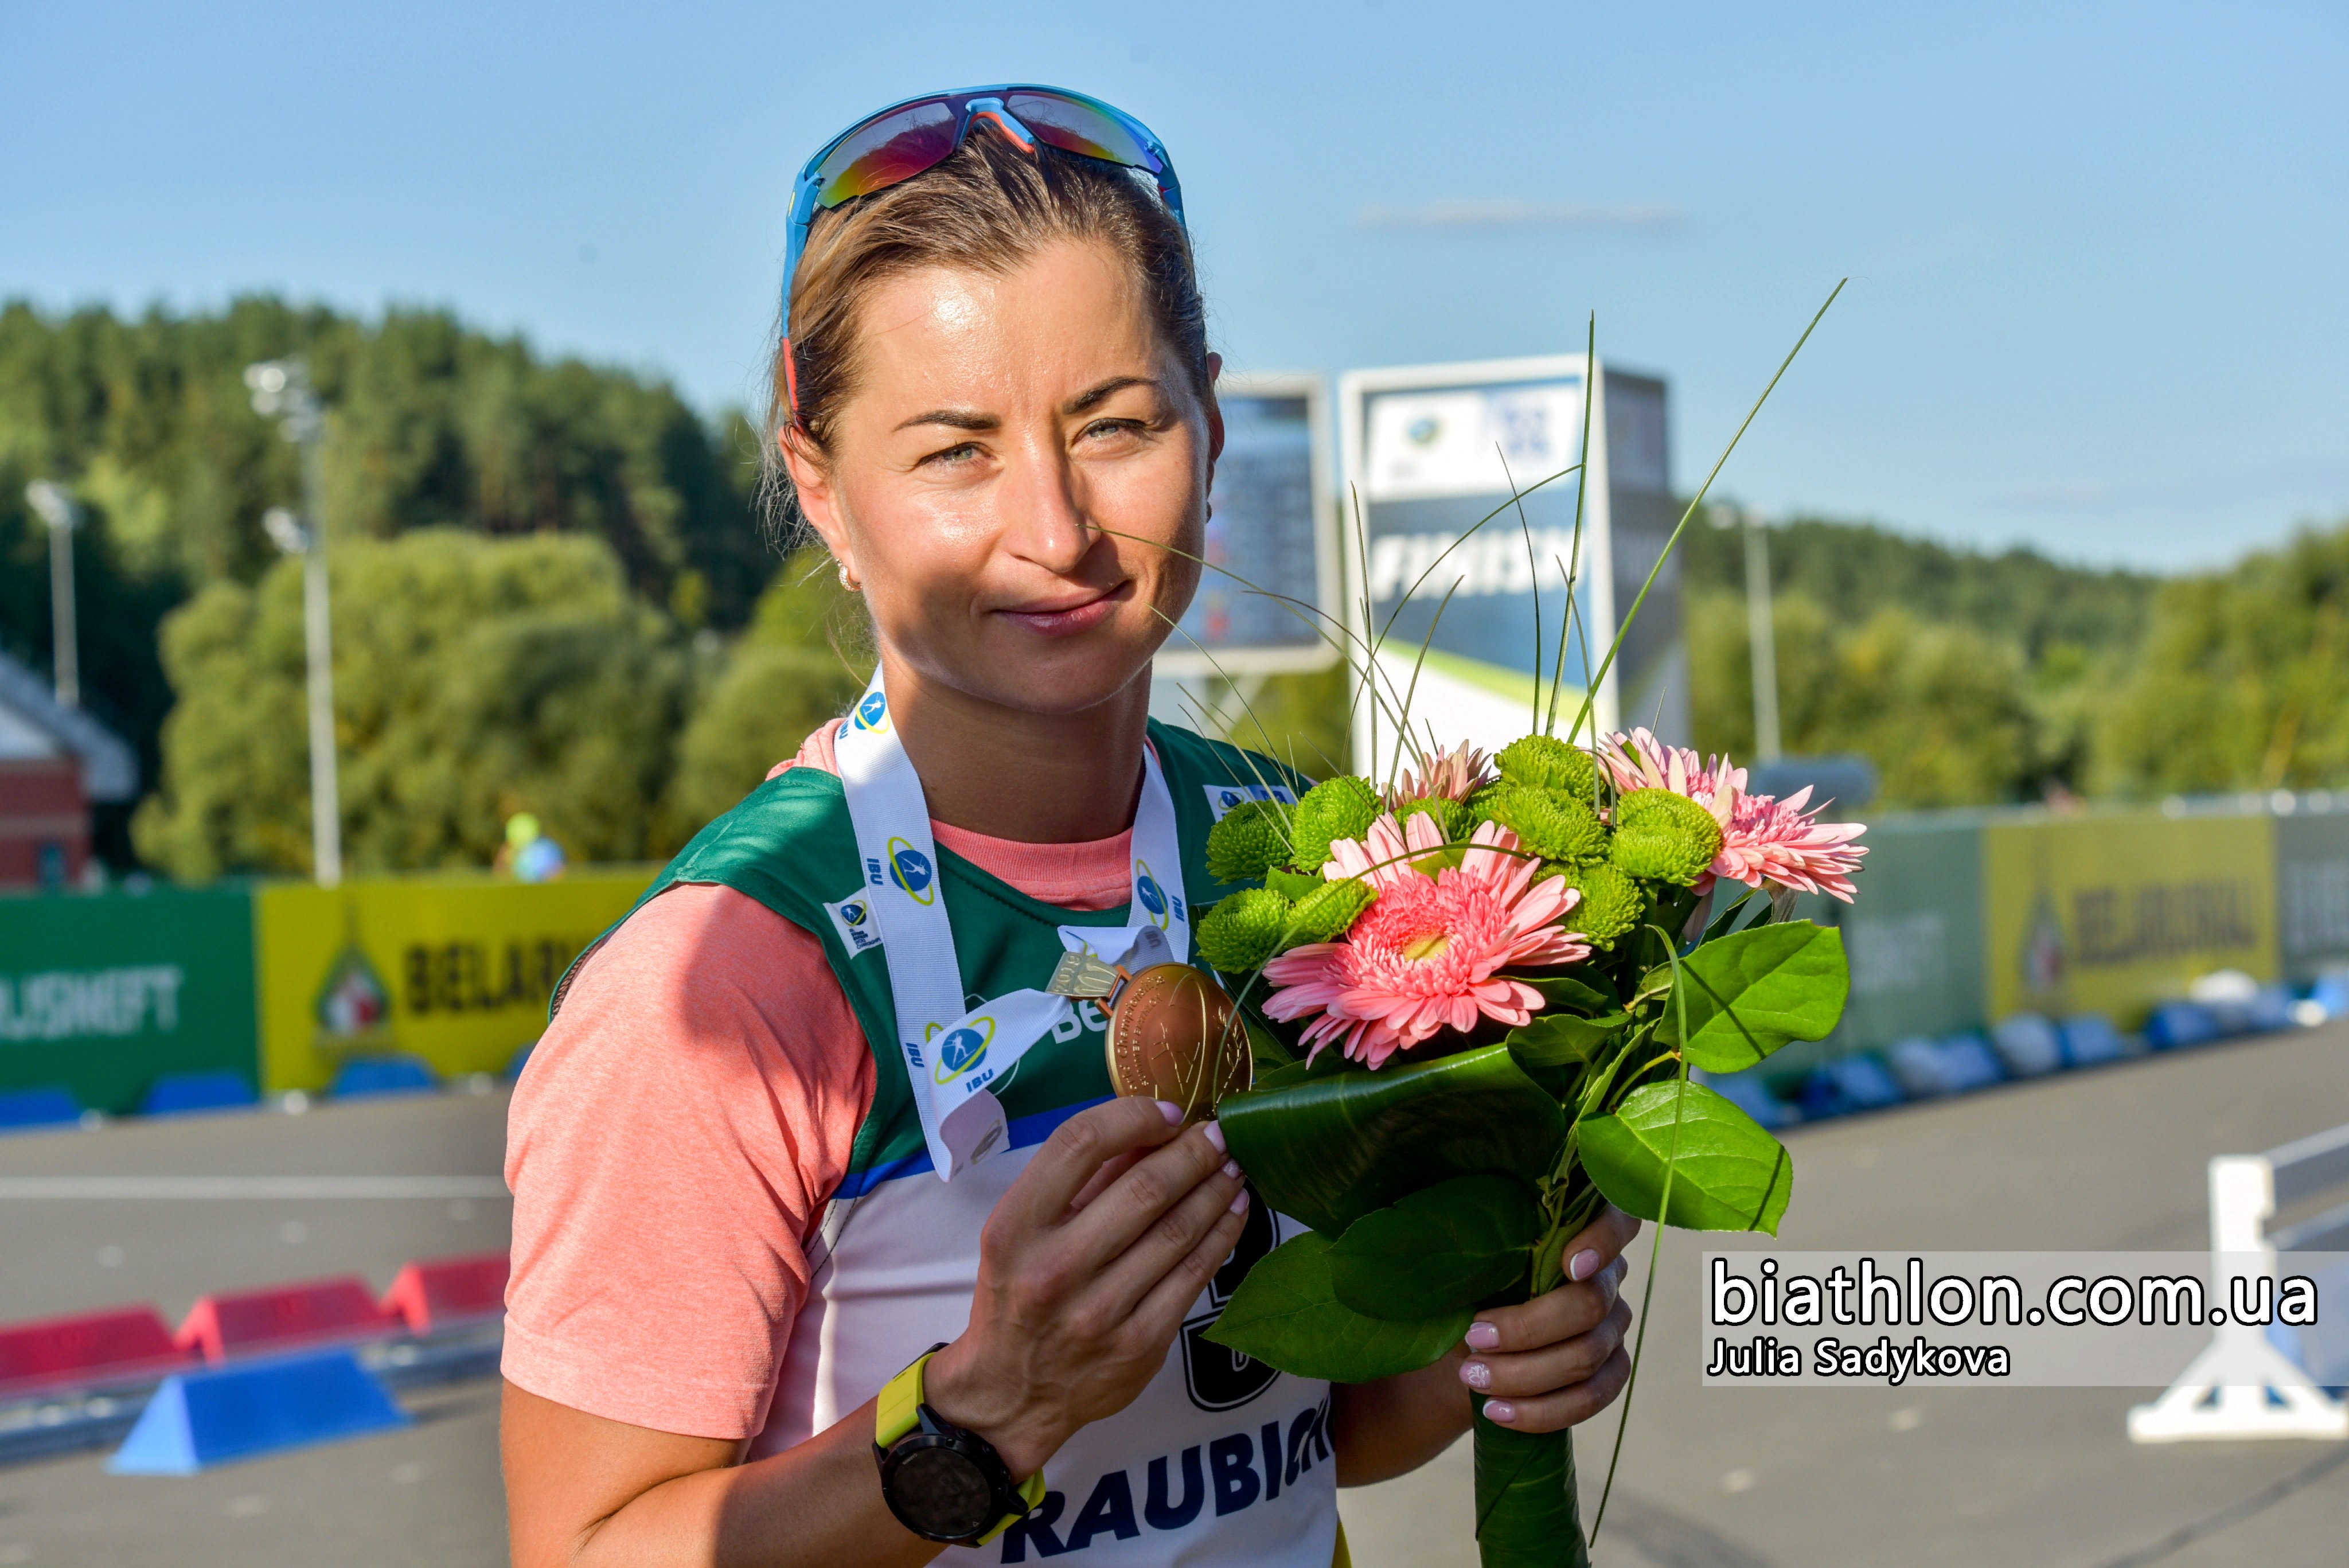 Валентина Семеренко заняла 1-е место в супер-спринте на летнем чемпионате мира по биатлону